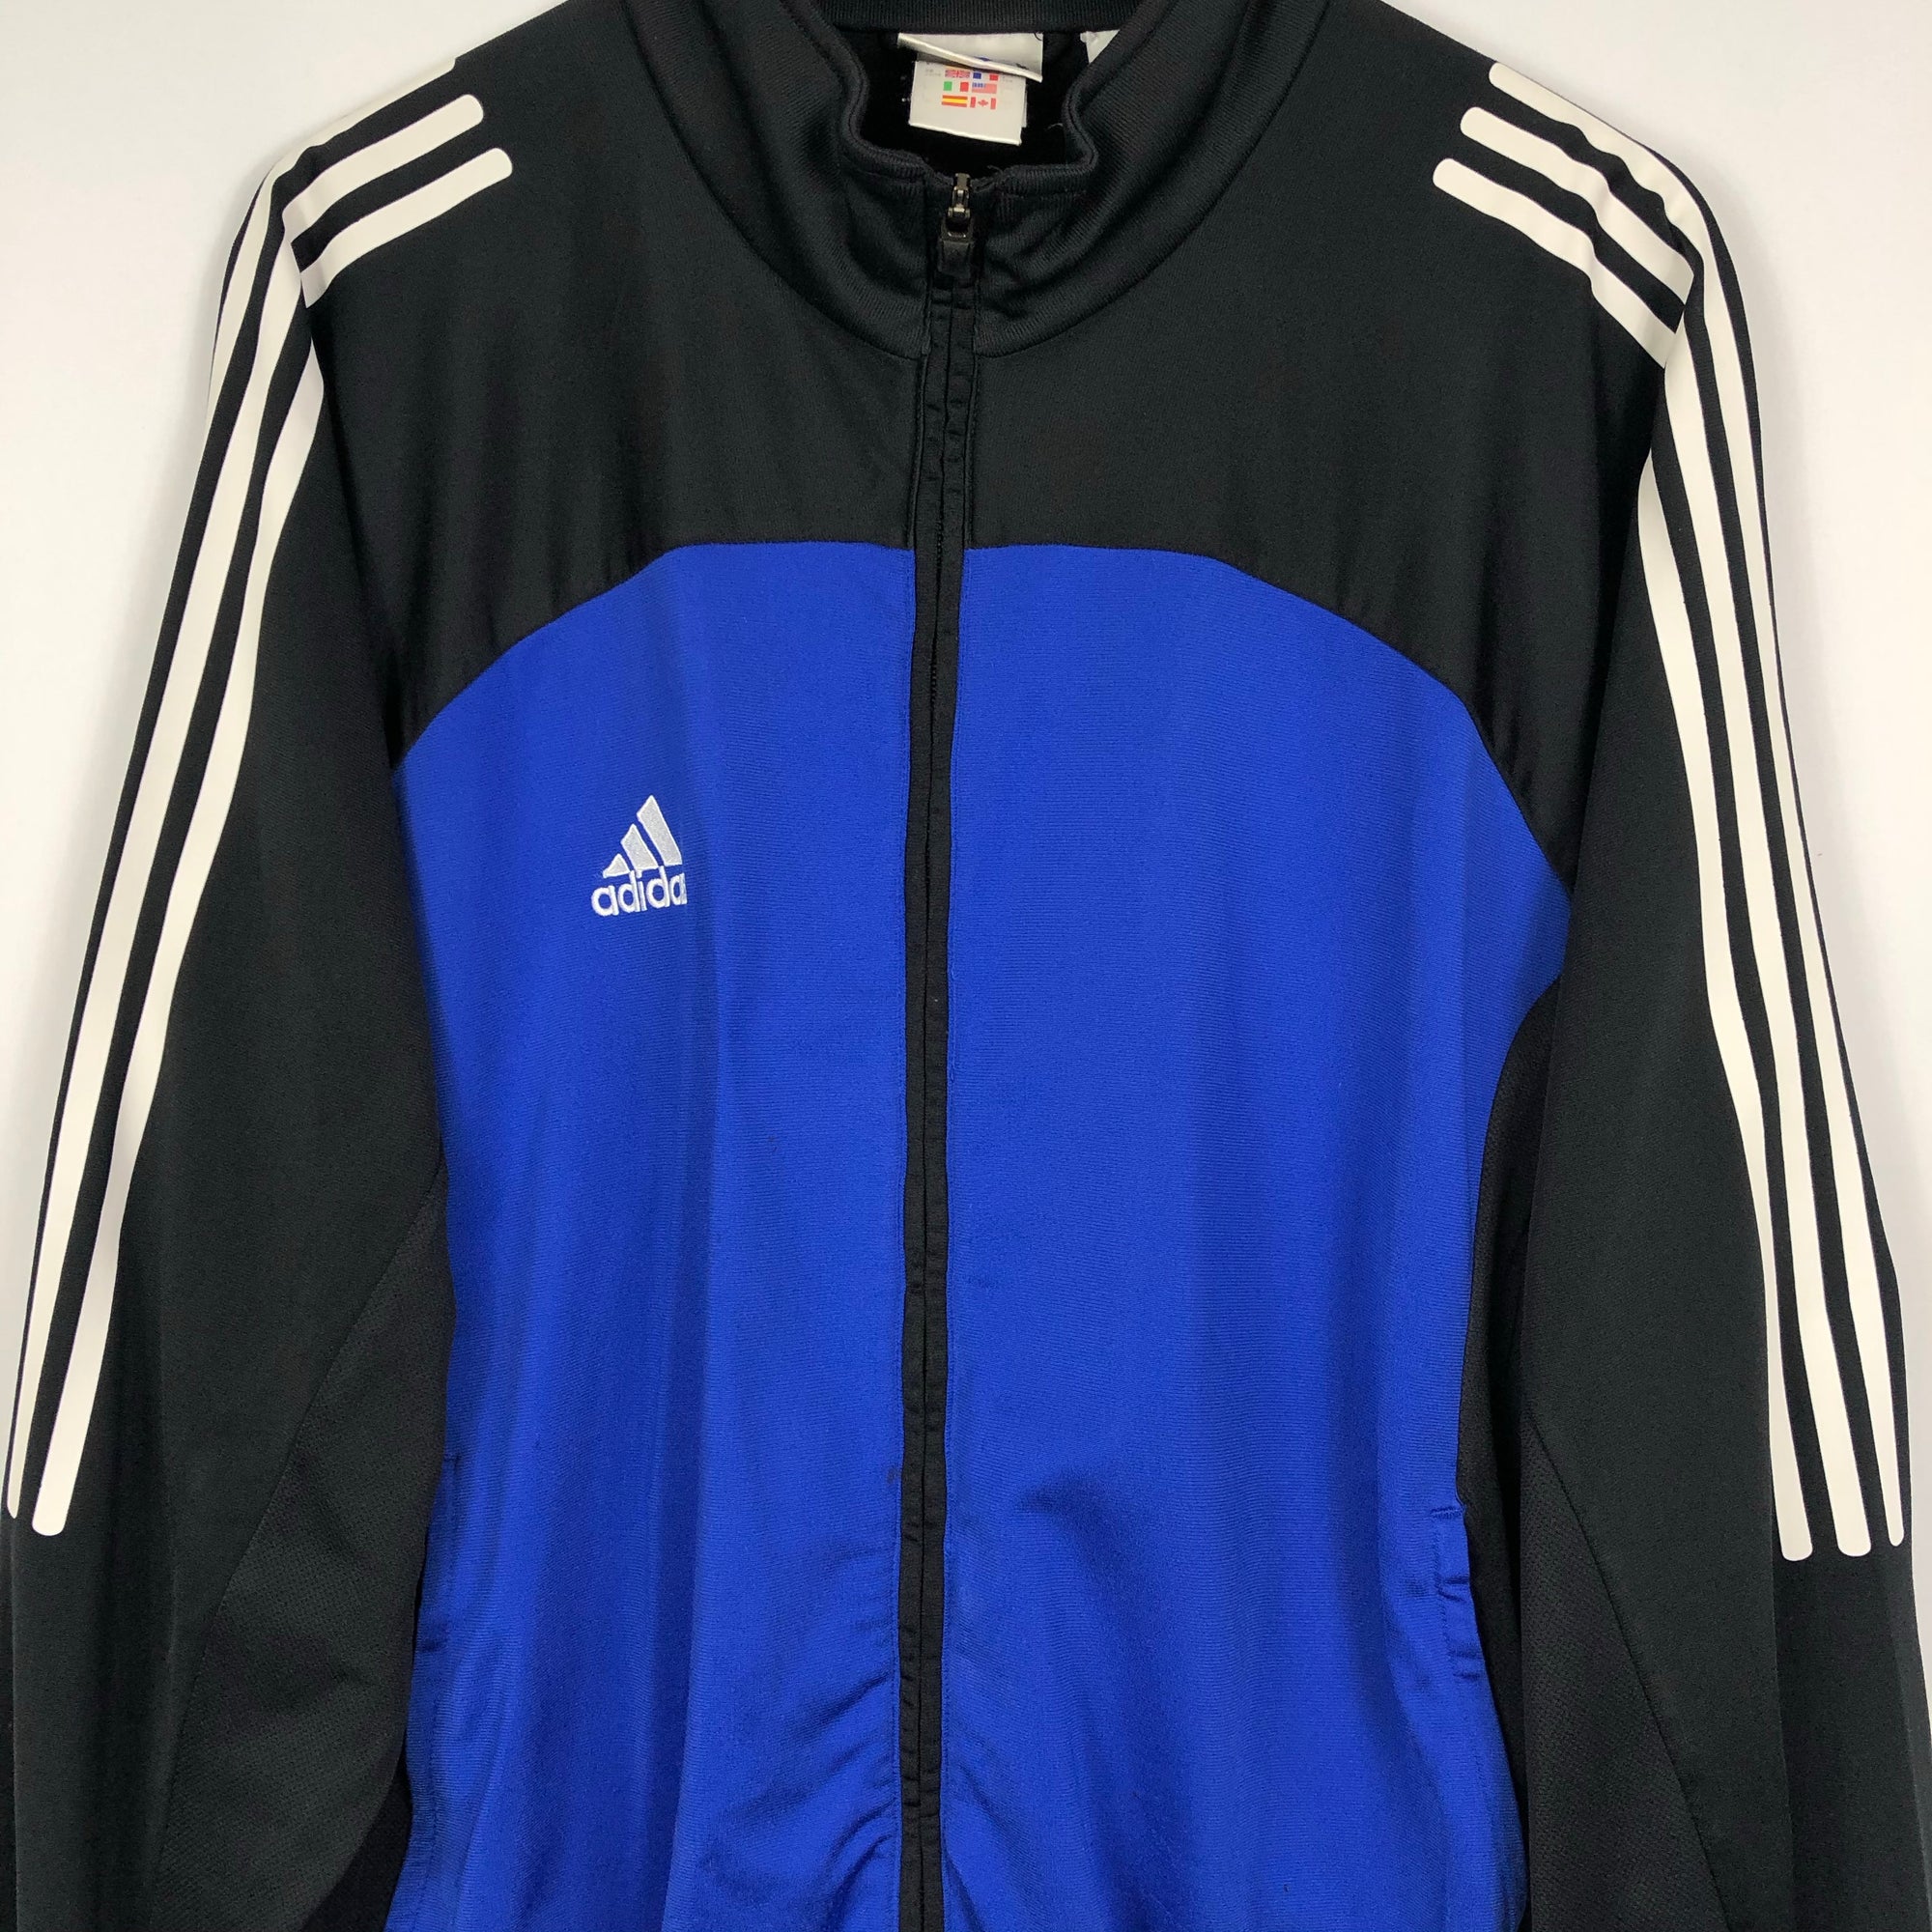 Adidas Track Jacket in Black, Blue & White - Men’s Large/Women’s XL